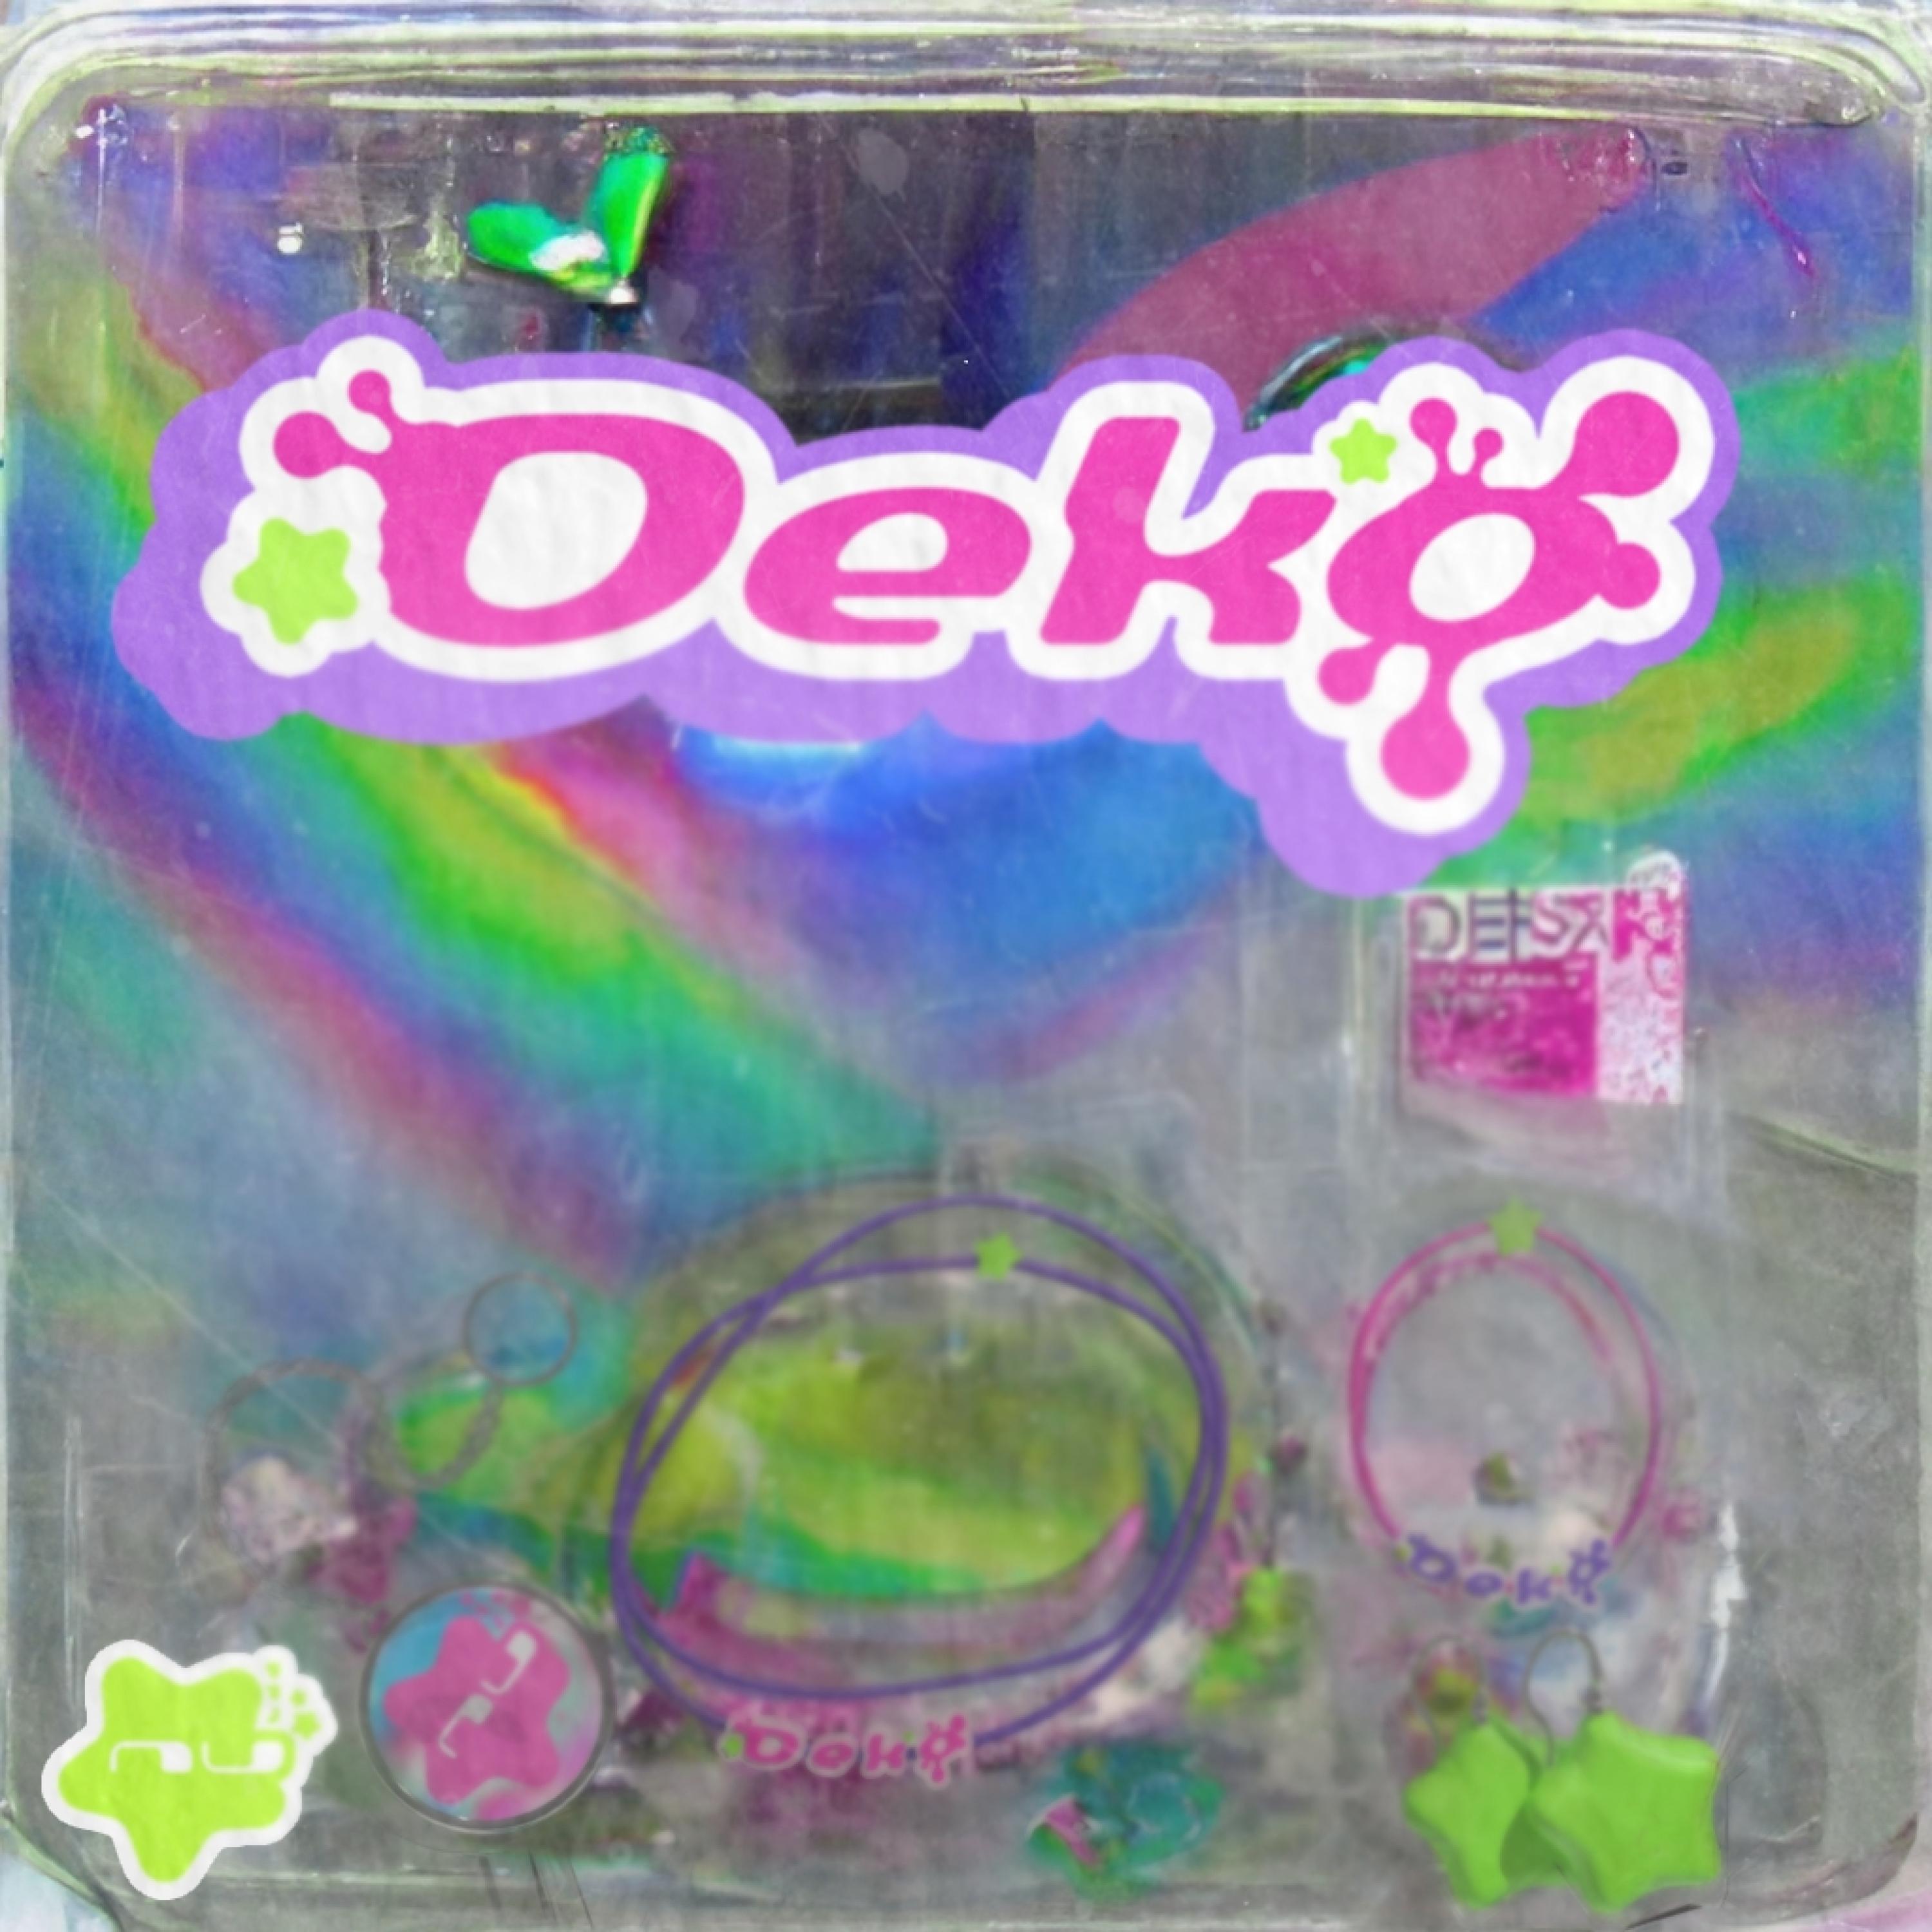 Deko - spectacular sensation